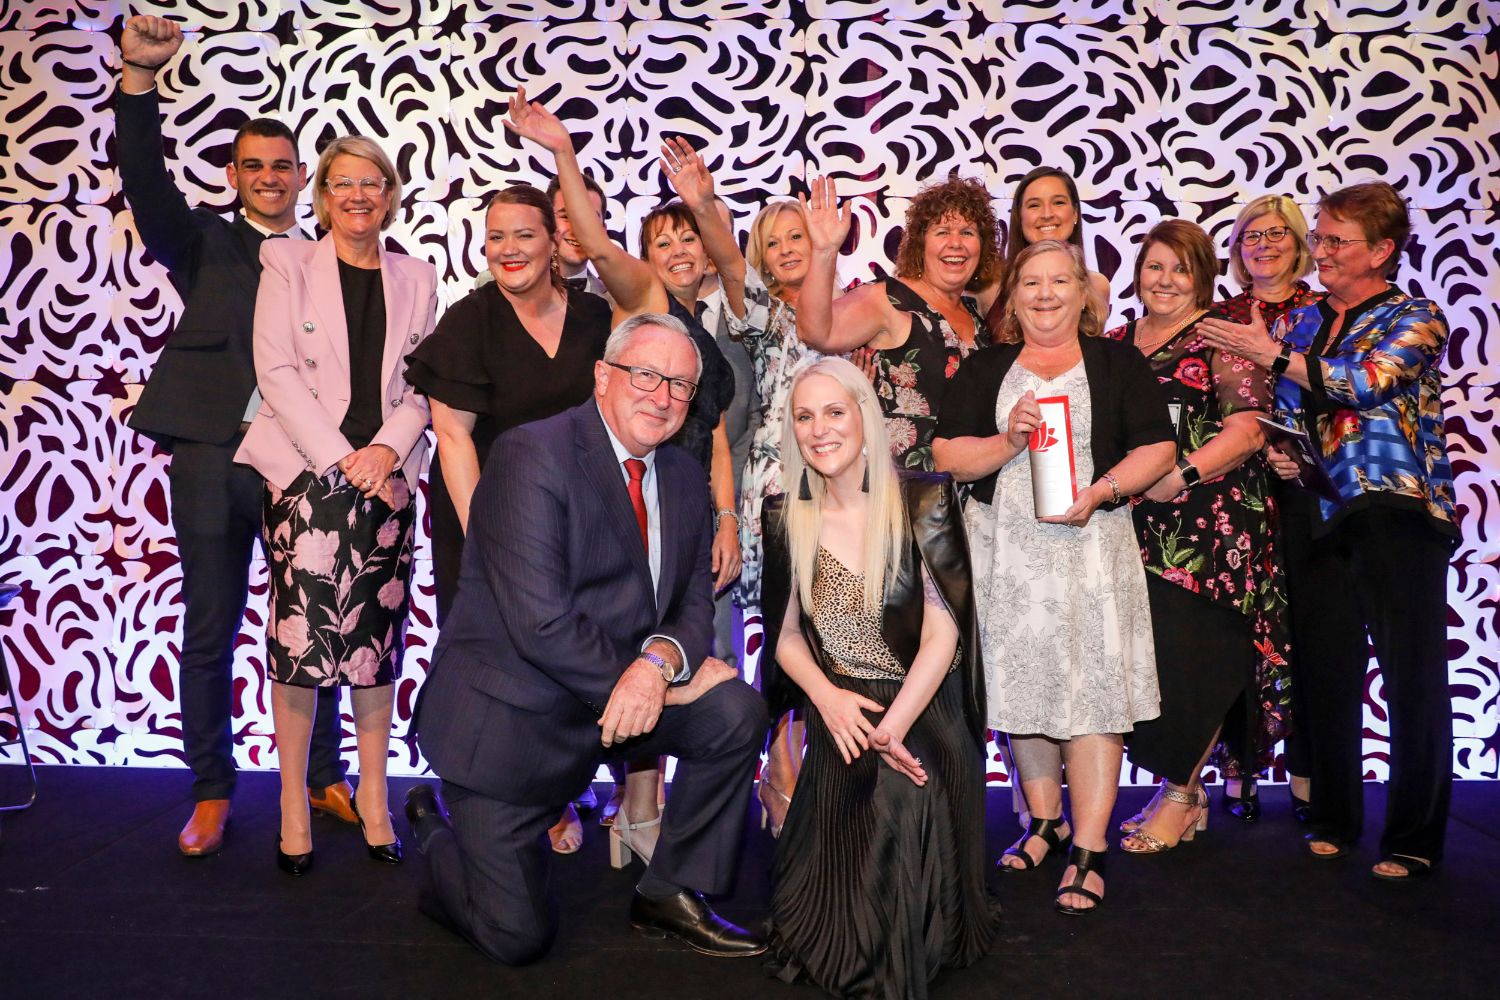 2019 NSW Health Awards iamge gallery